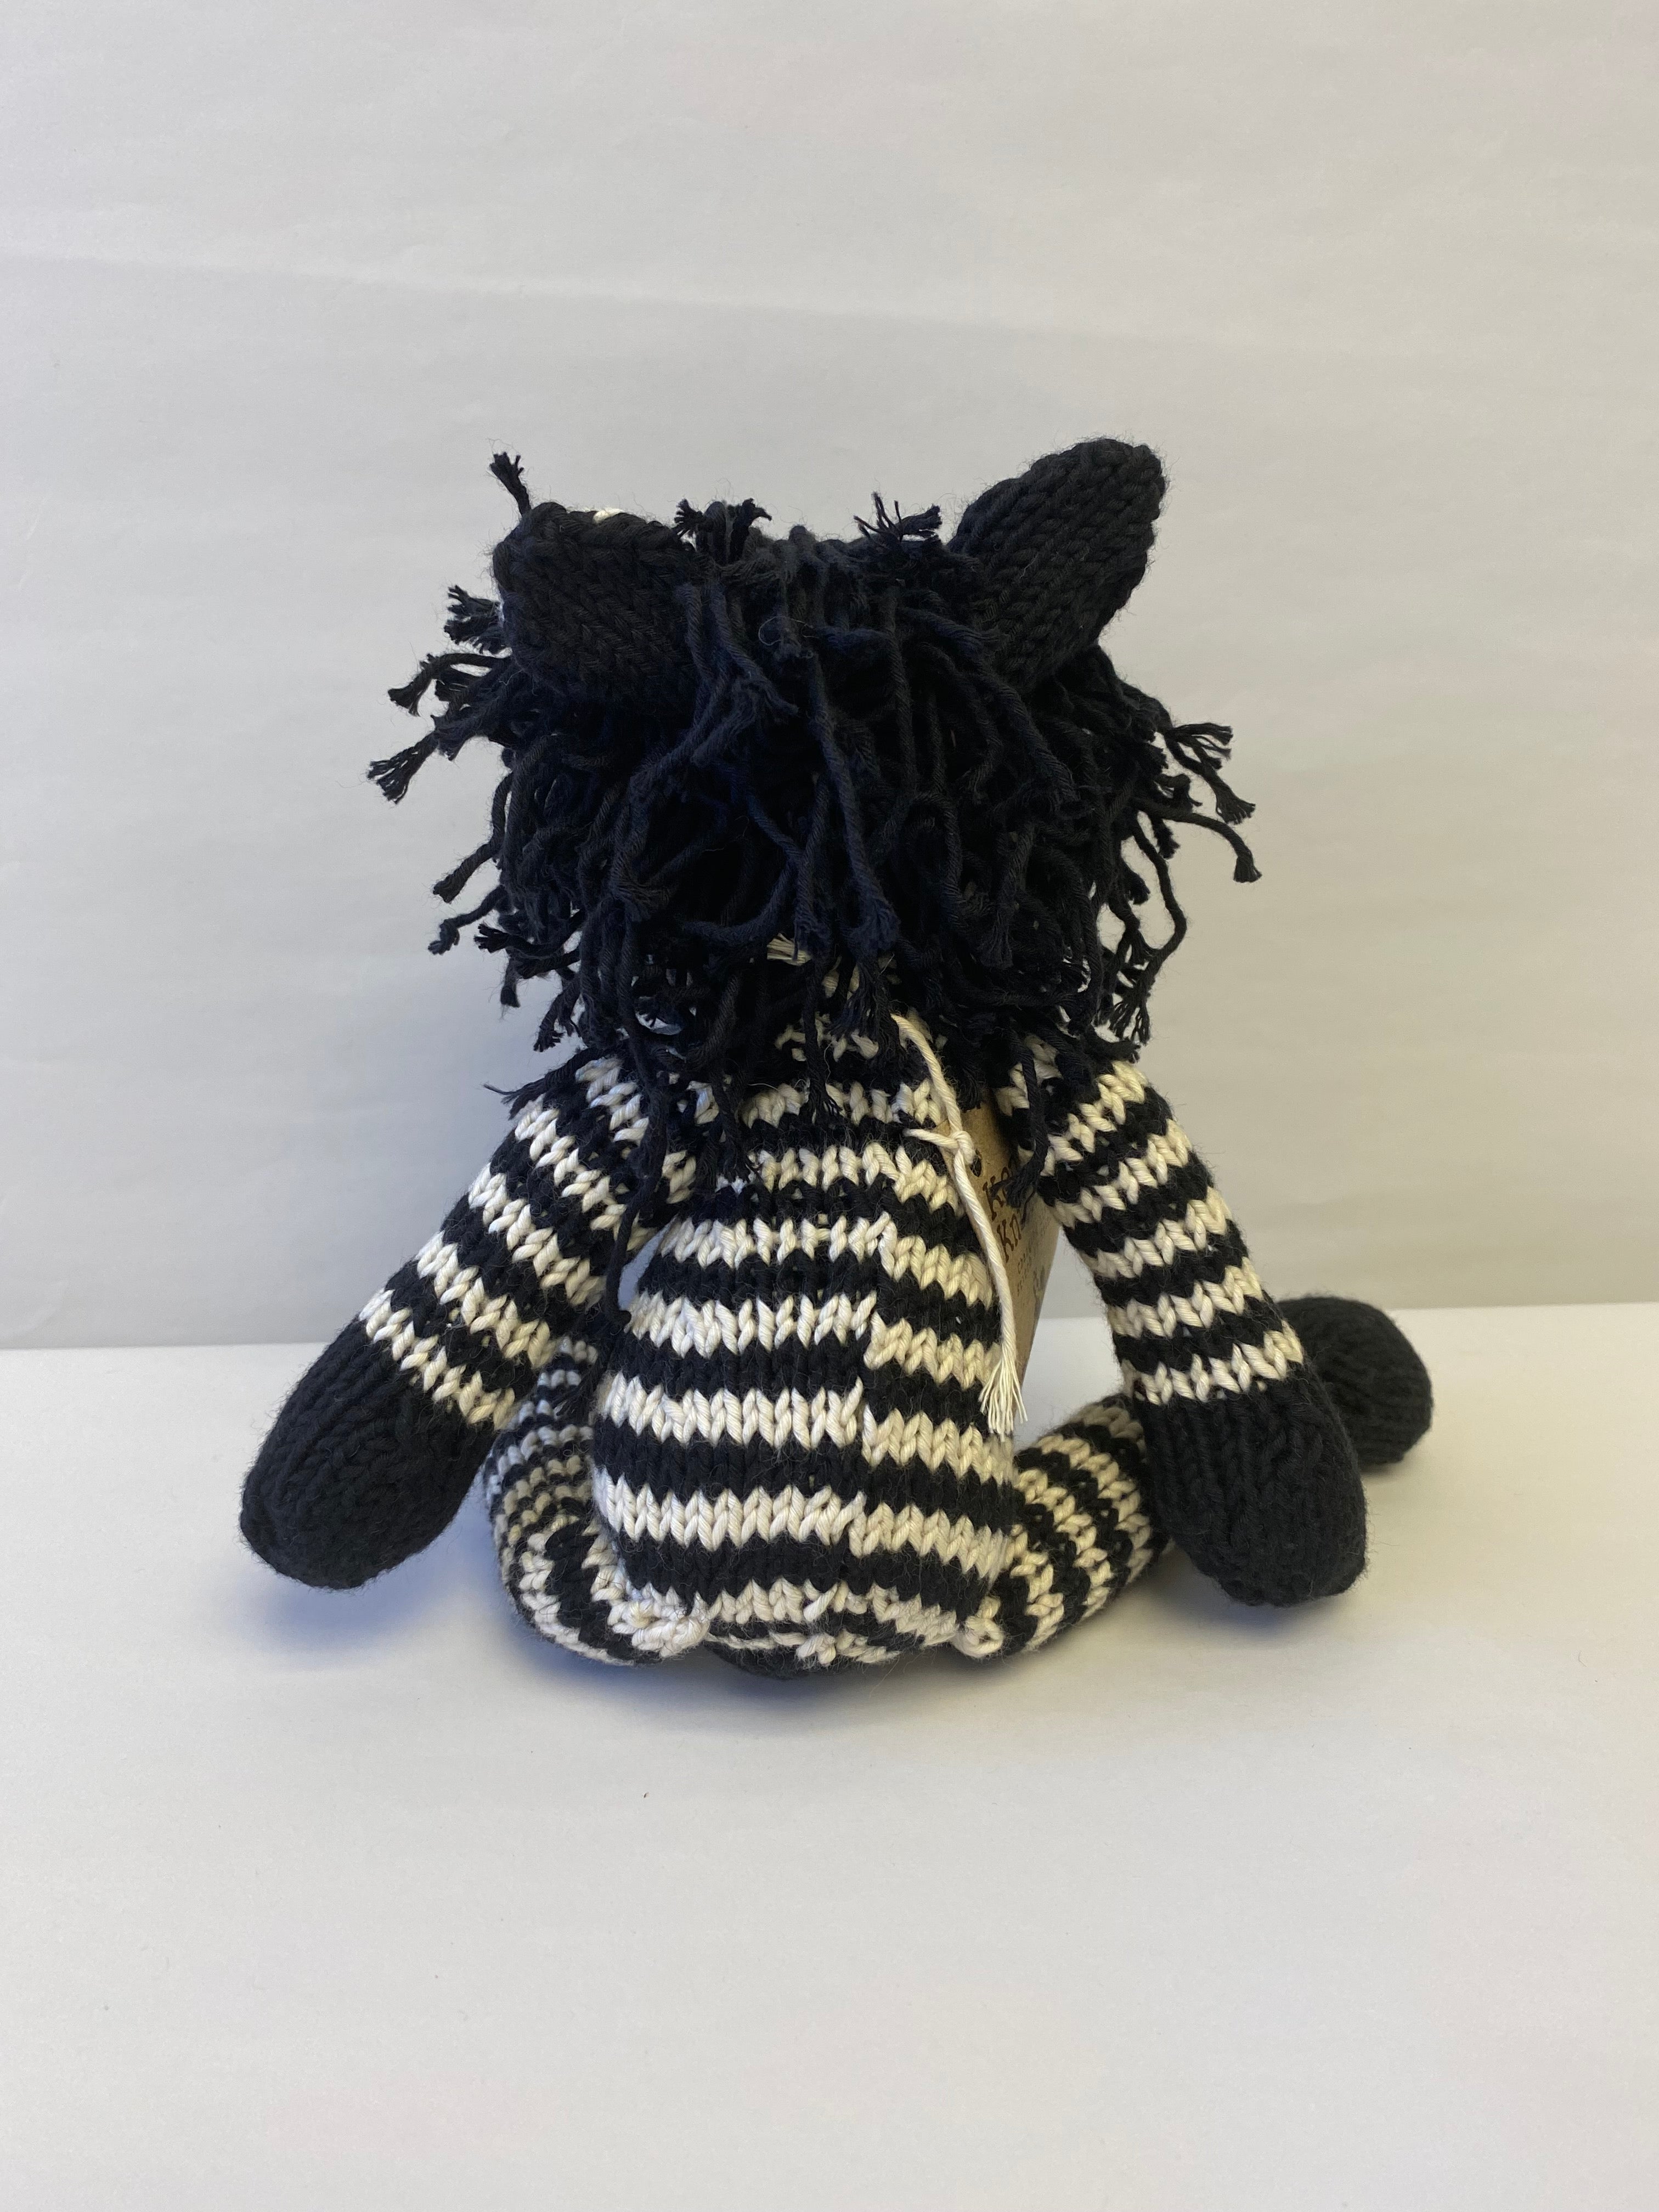 Hand Knitted Zebra